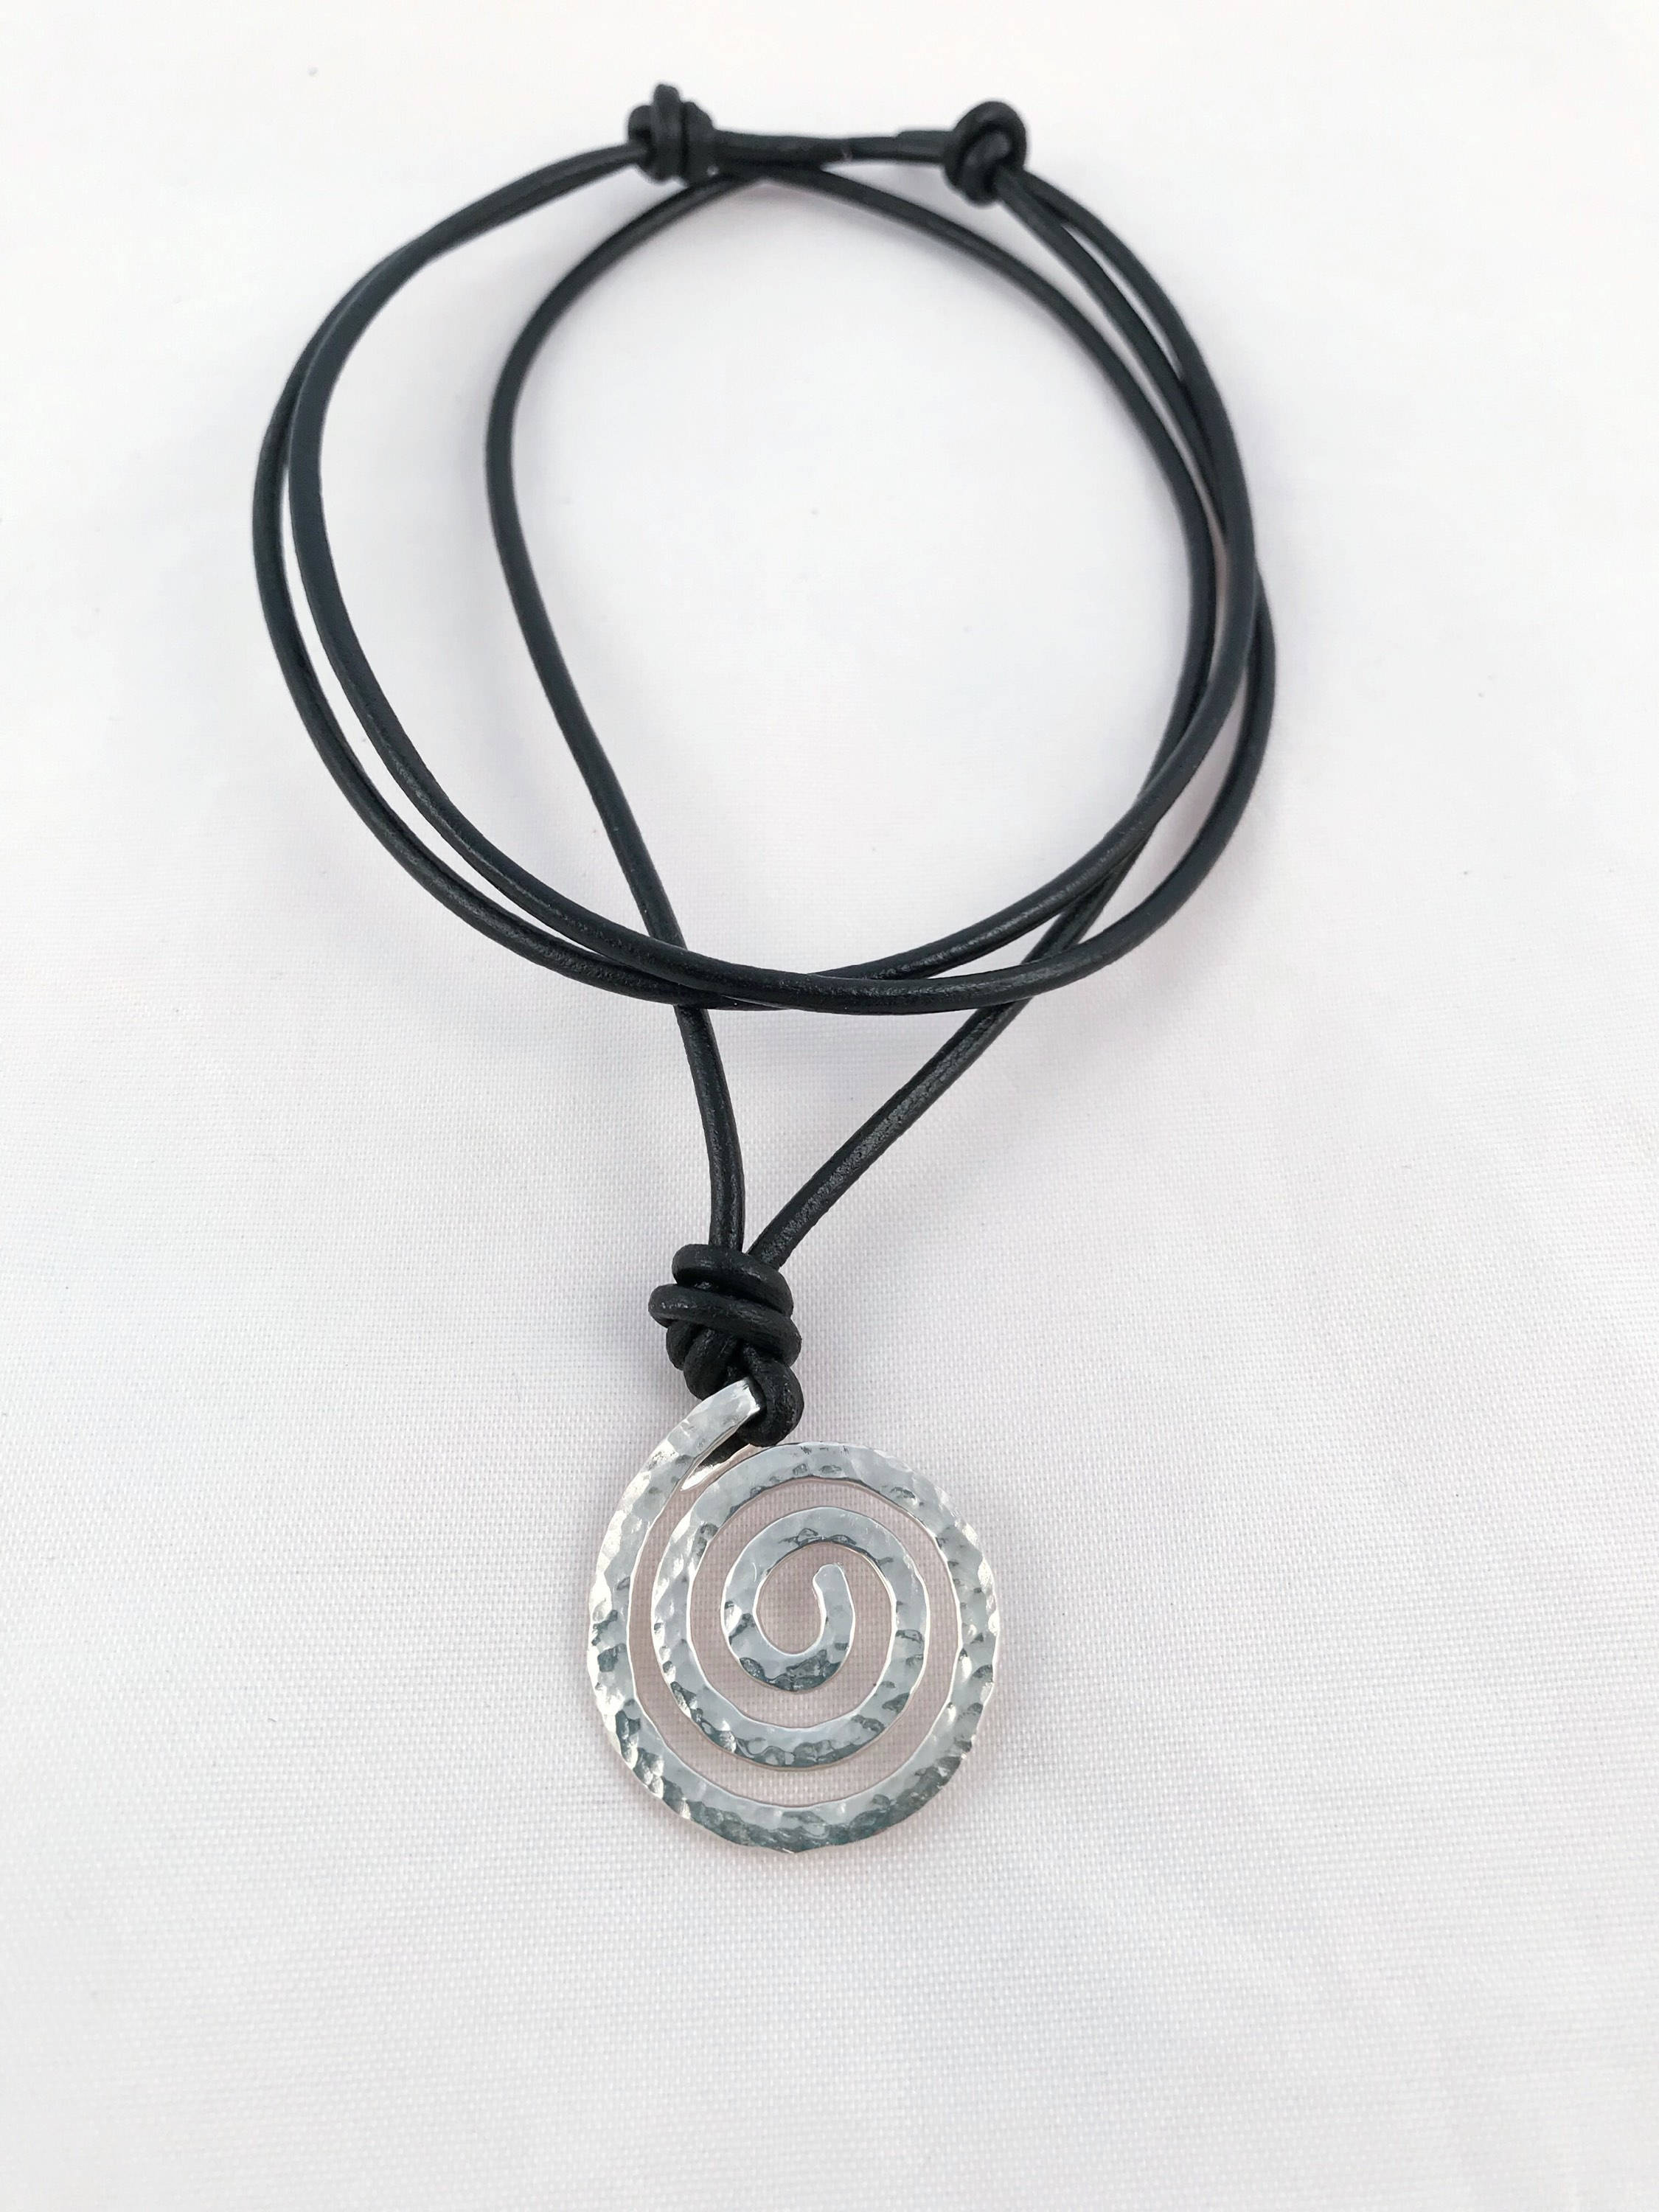 Men's Spiral Necklace / Solid Sterling Silver / Hammer Forged